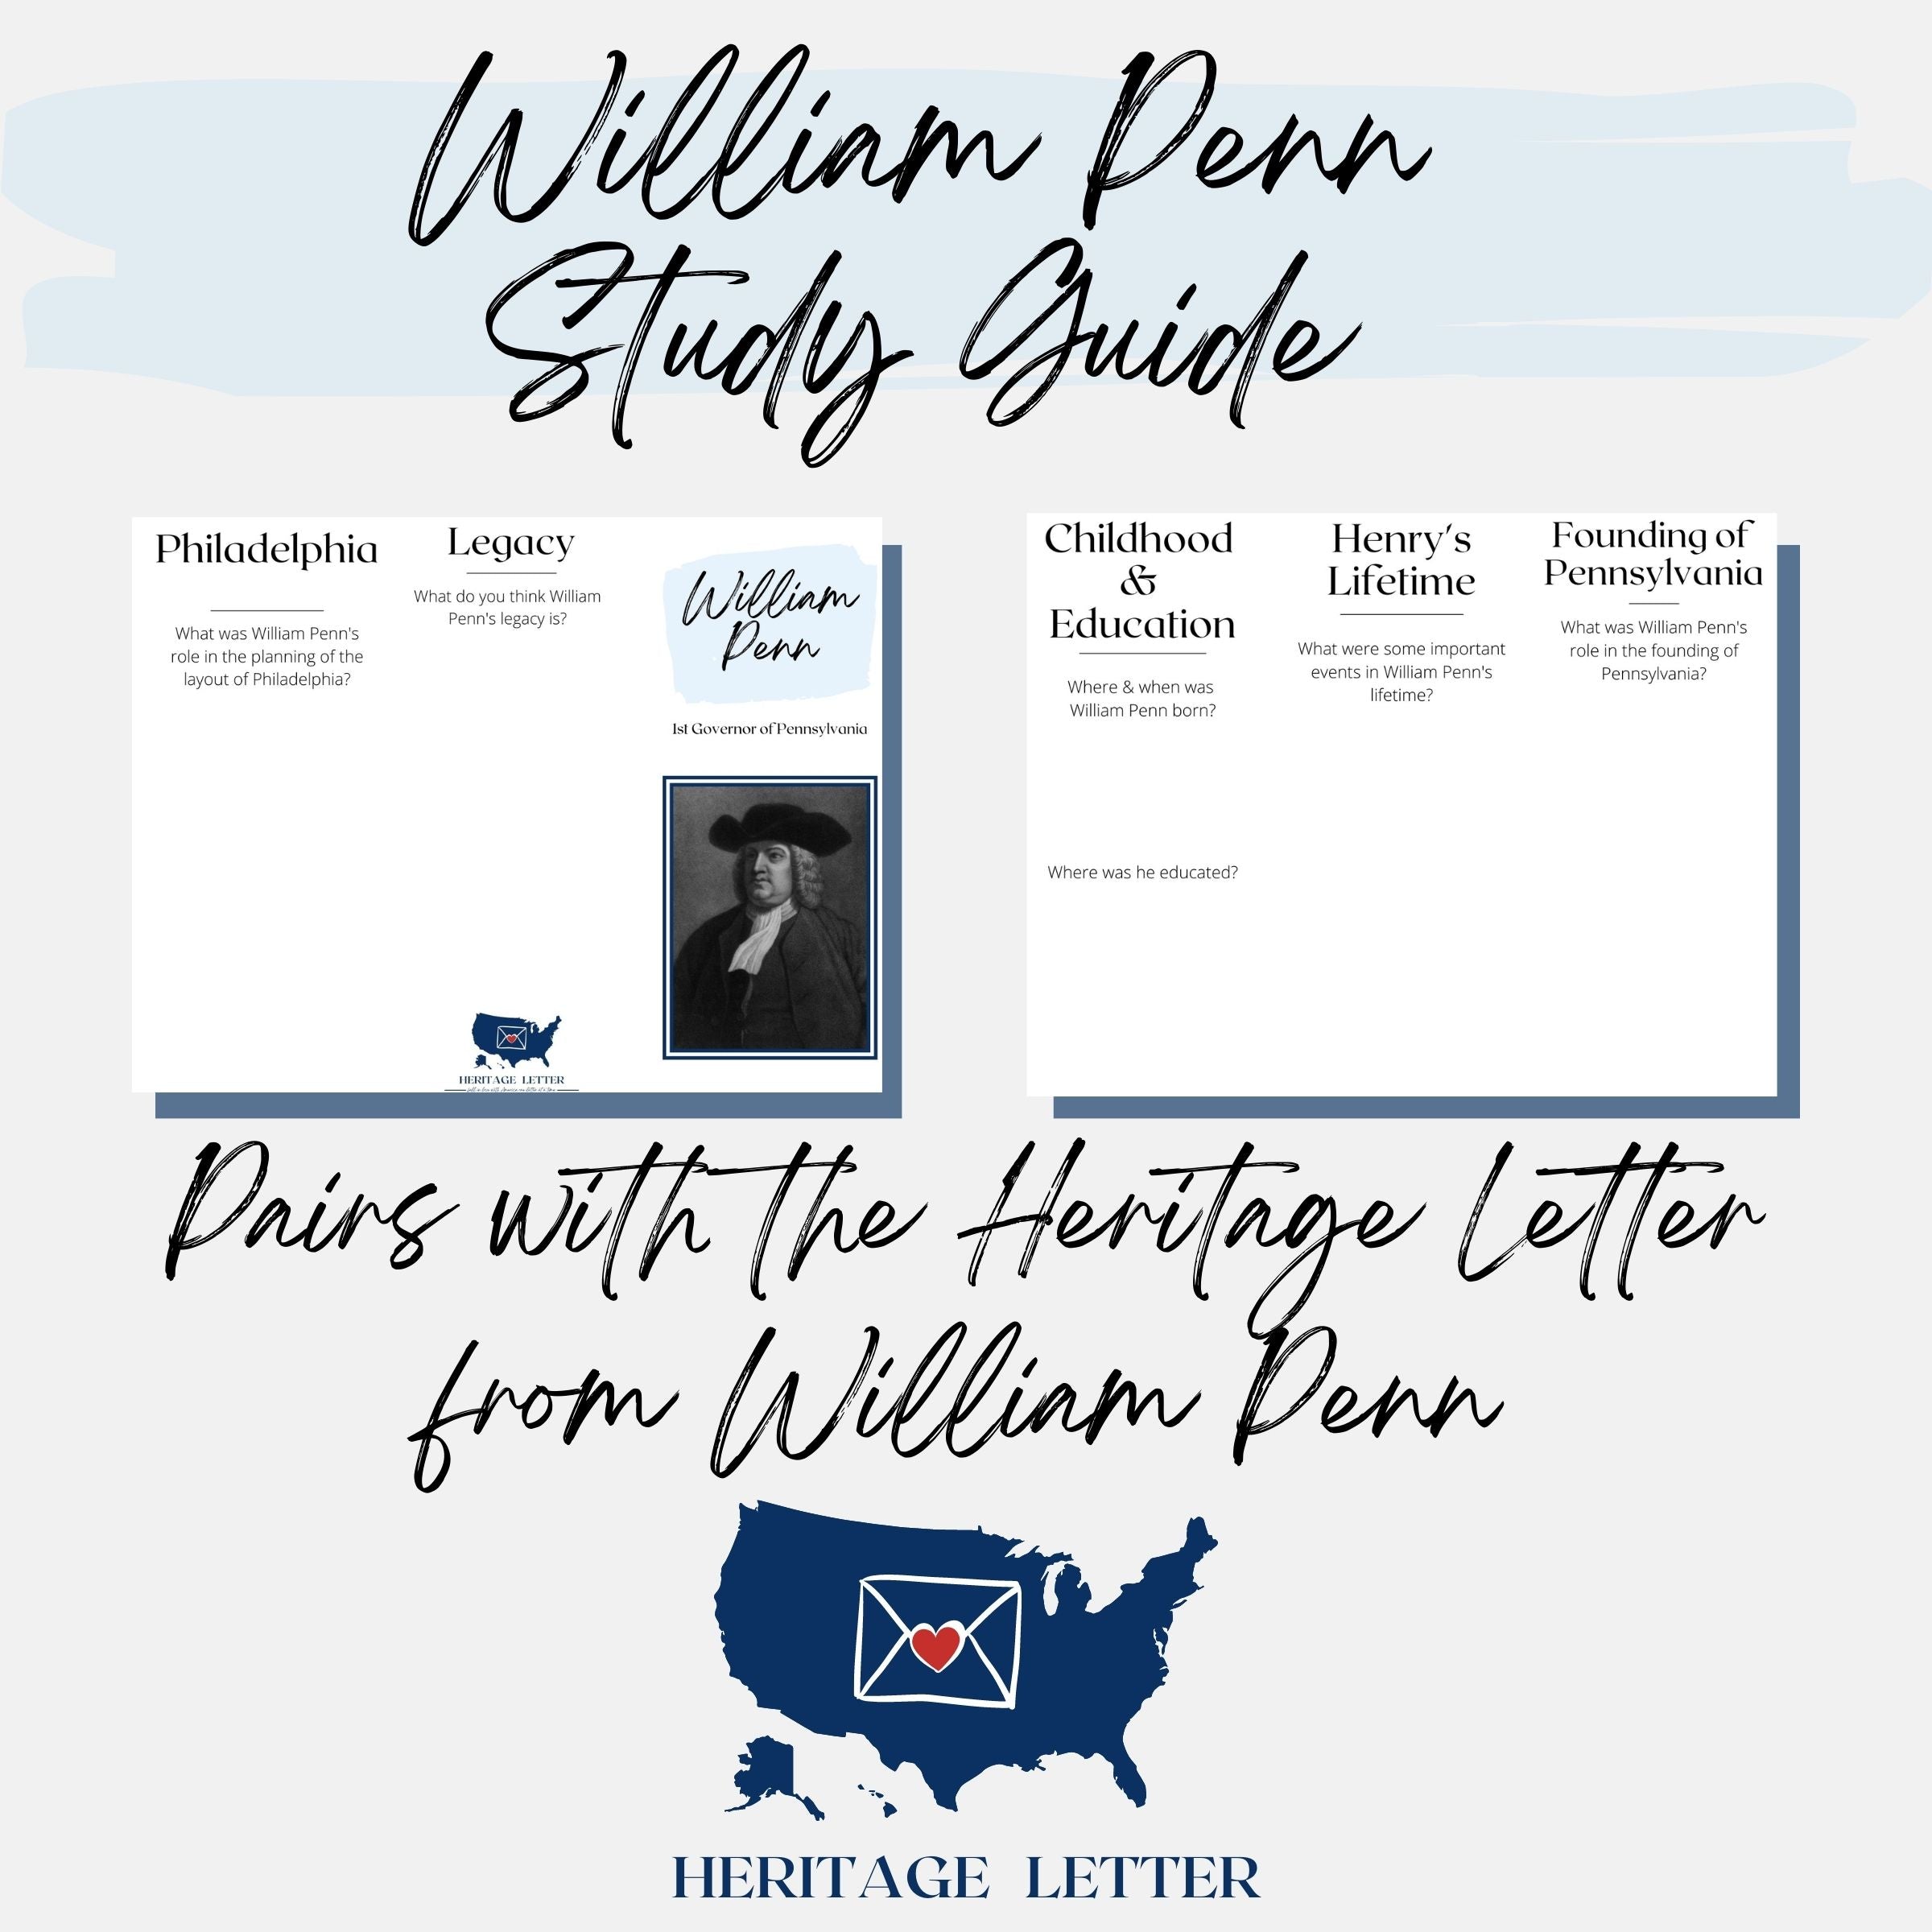 William Penn Study Guide